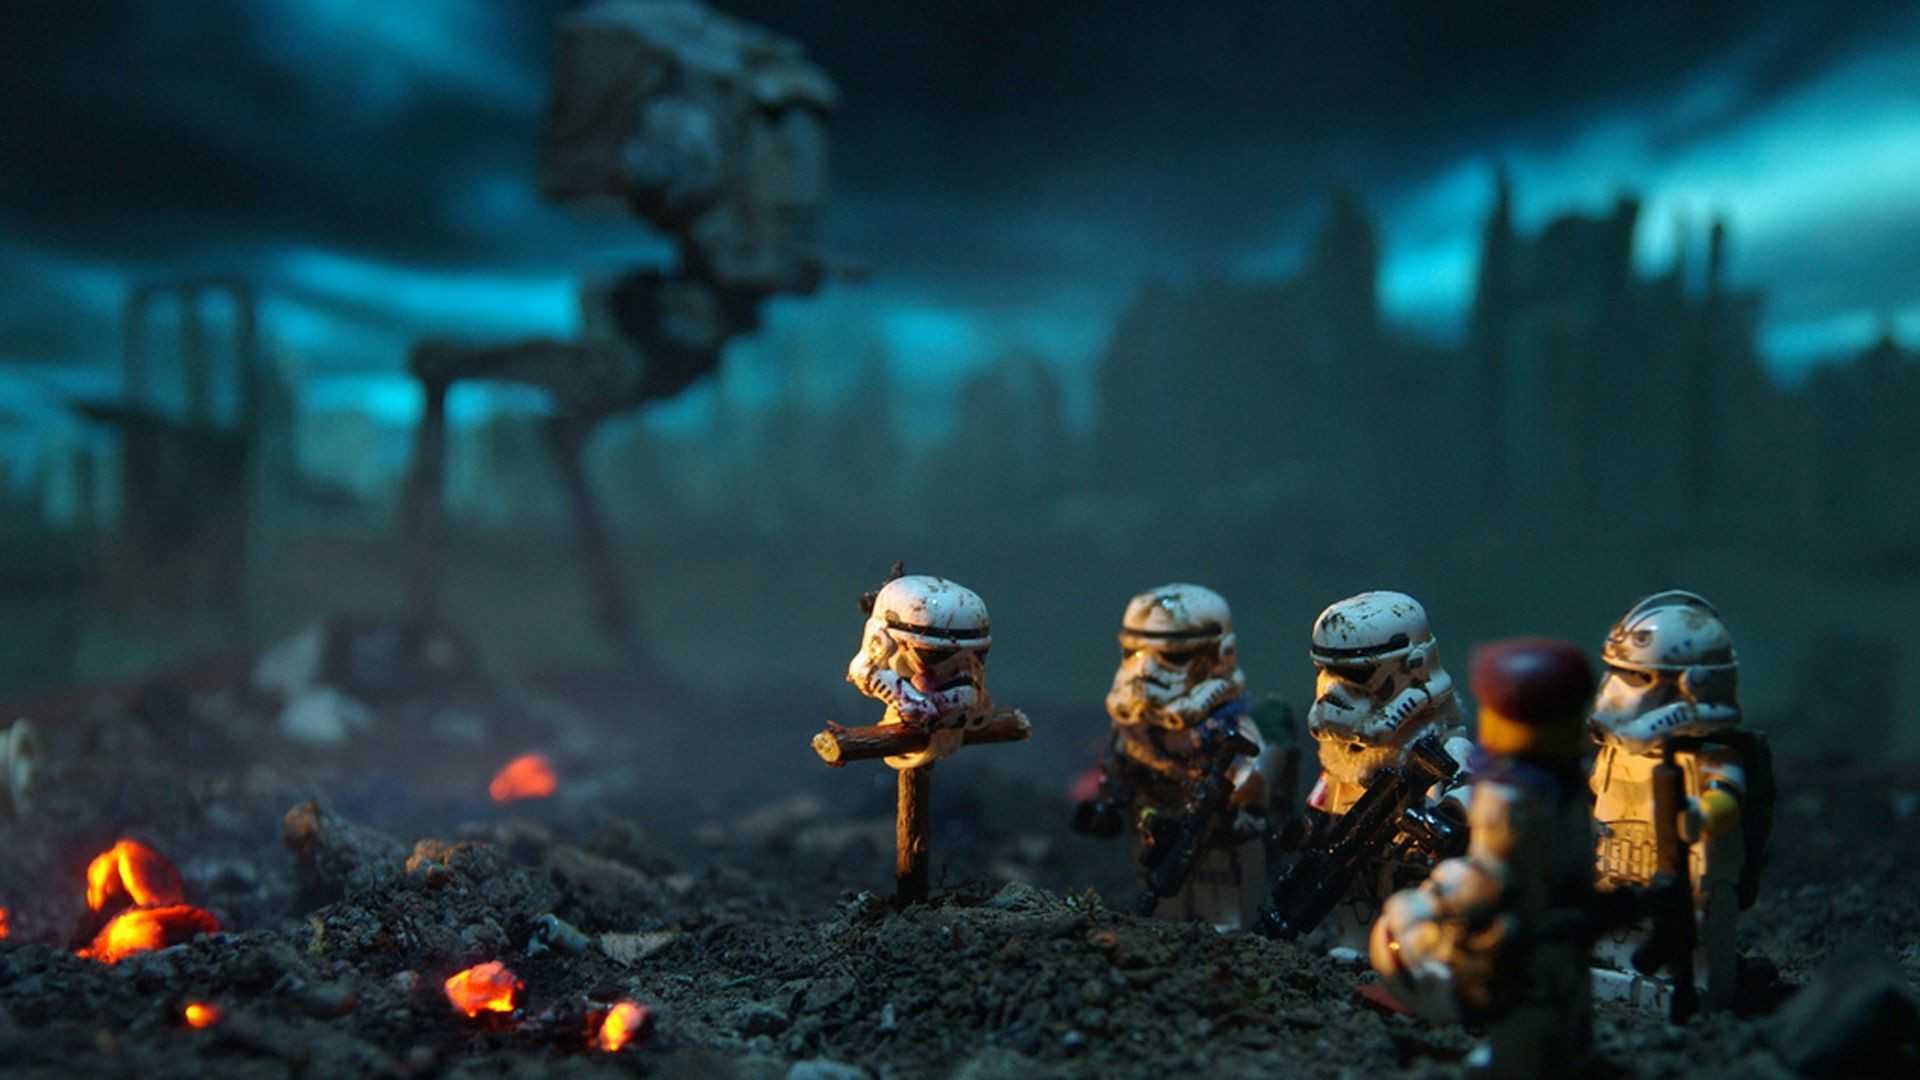 Lego Star Wars Background For Widescreen Wallpaper Desktop High